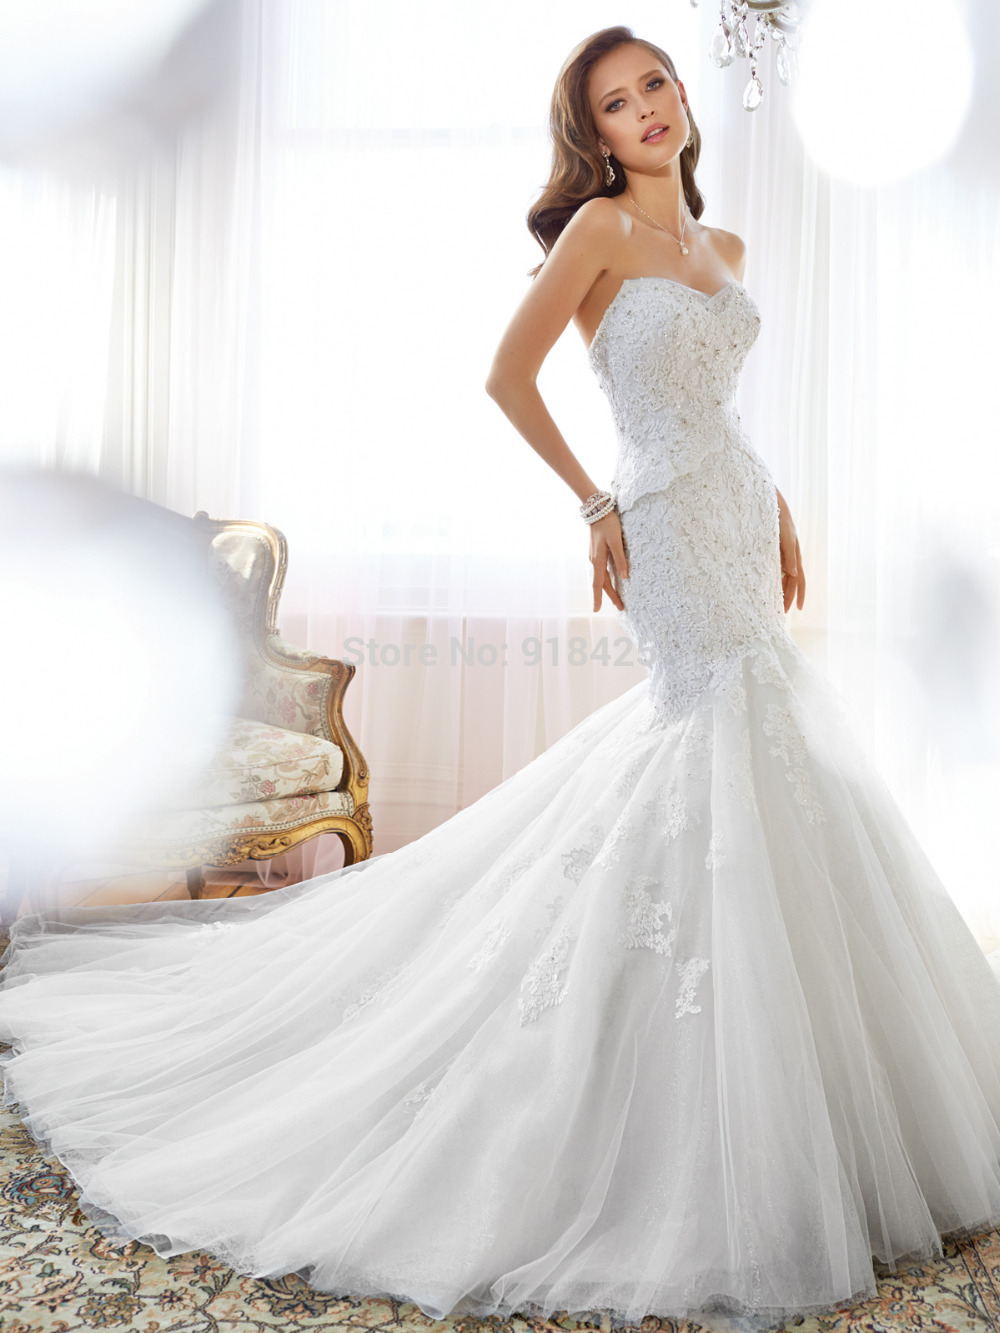 Latest-Custom-Made-Lace-Mermaid-Wedding-Dresses-2015-Designer-Gown ...